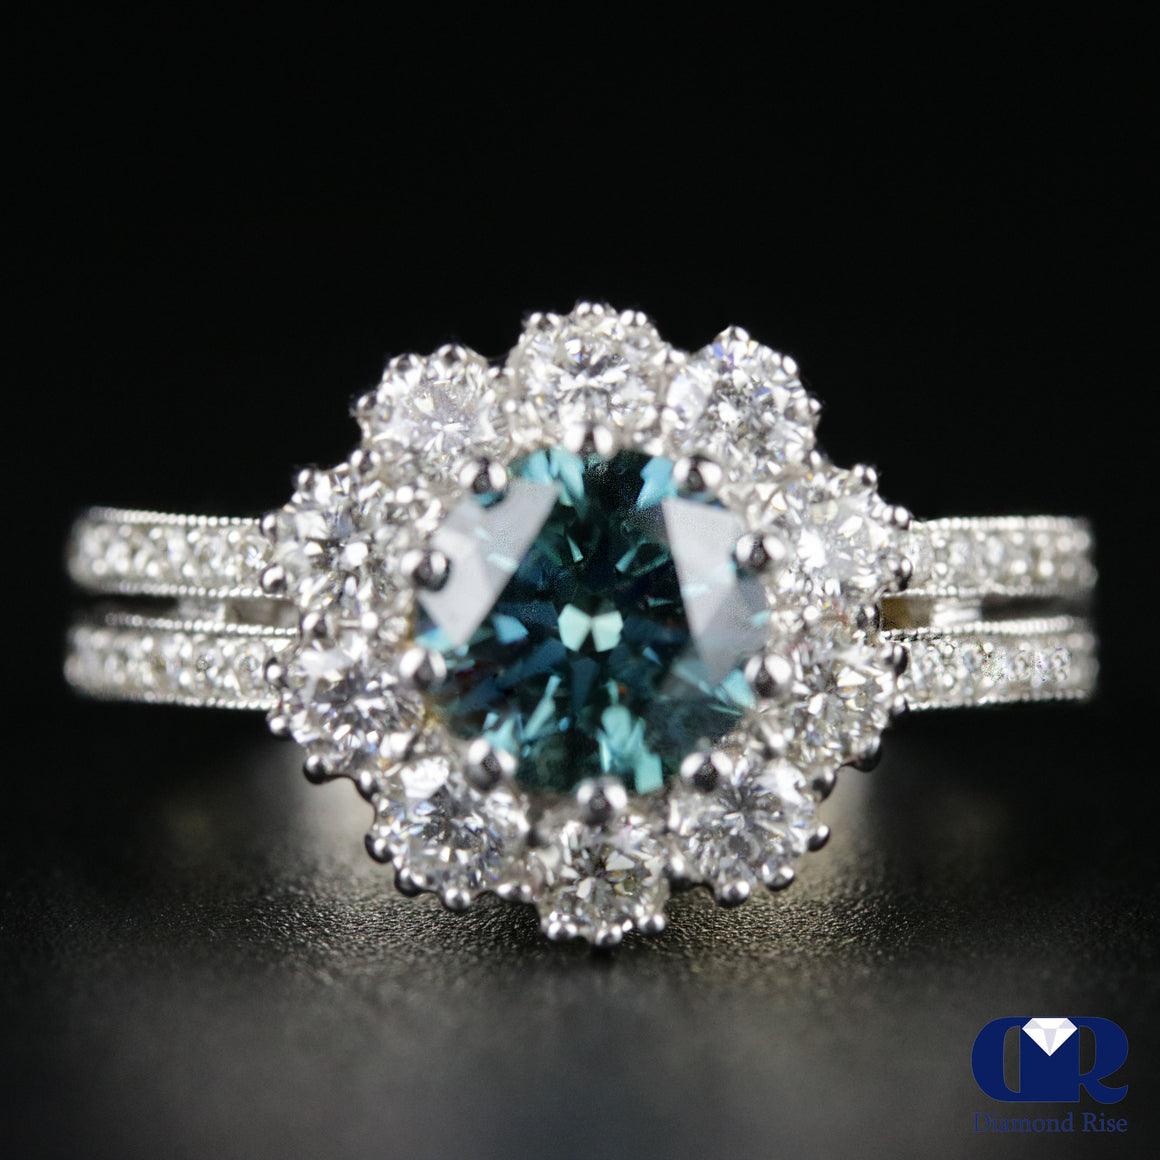 2.34 Carat Round Cut Blue Diamond Halo Engagement Ring In 14K White Gold - Diamond Rise Jewelry